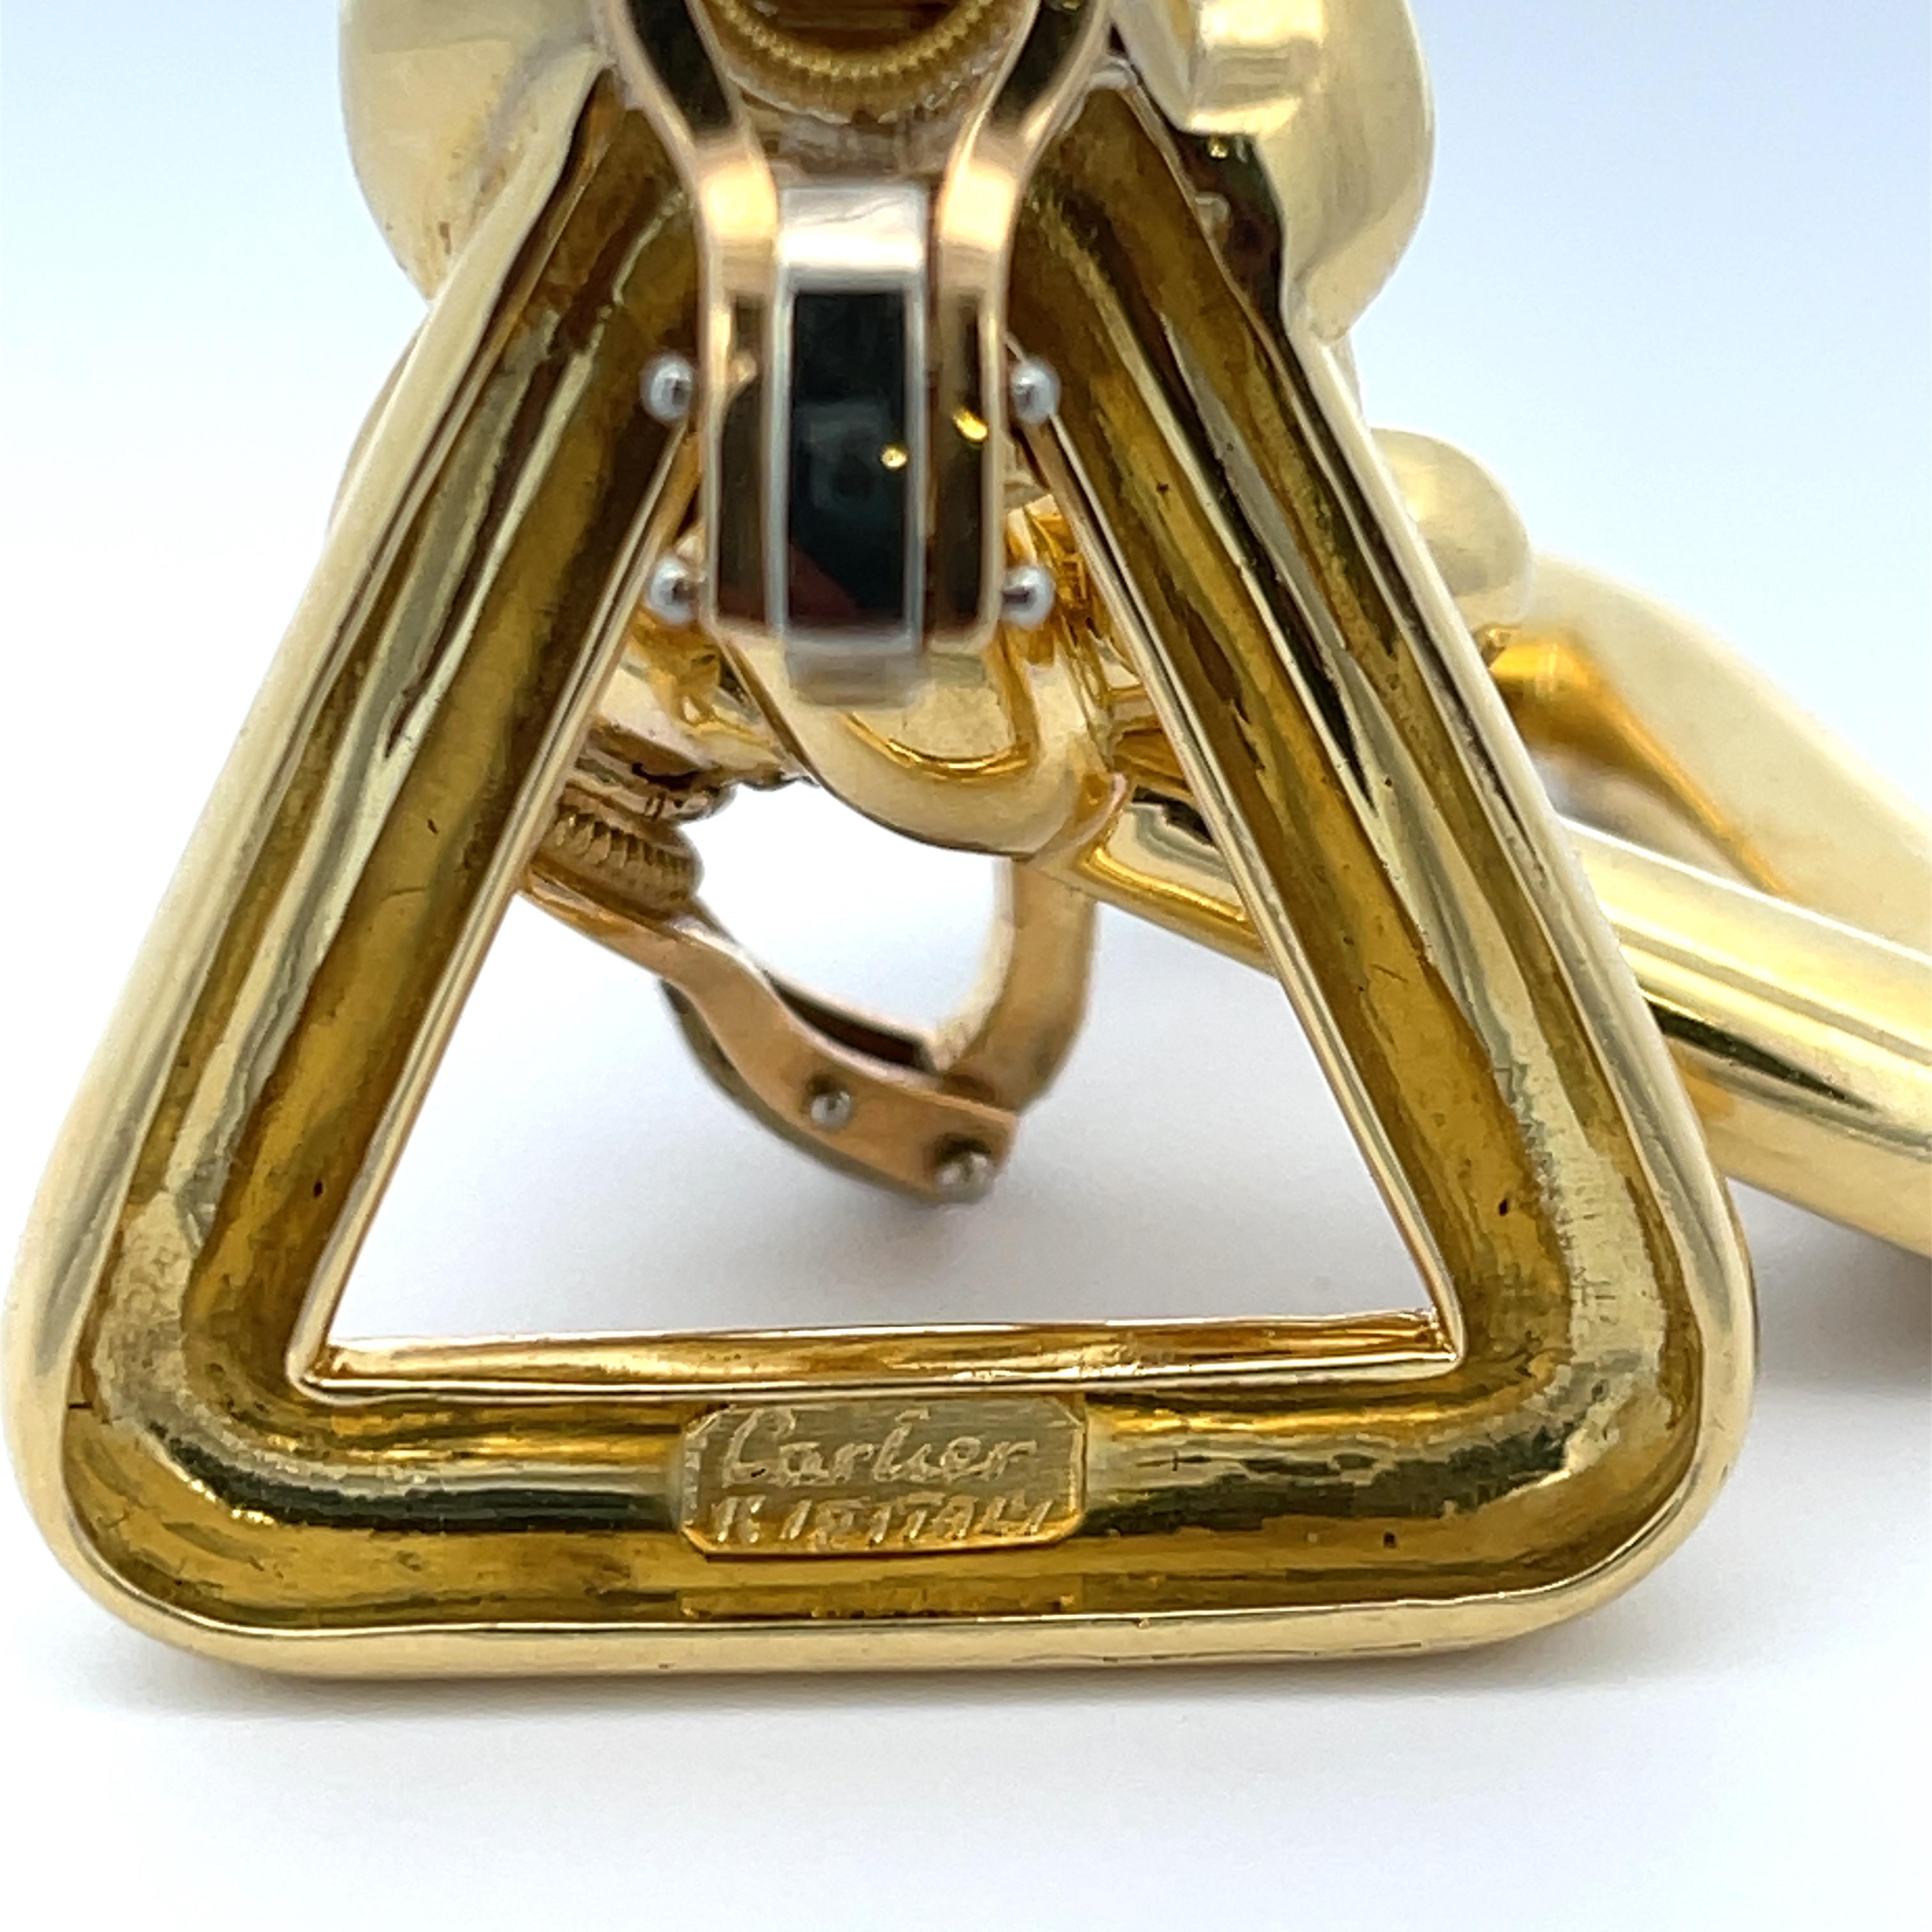 Estate Cartier Triangle Knot Earrings in 18K Yellow Gold. The earrings measure 1.5